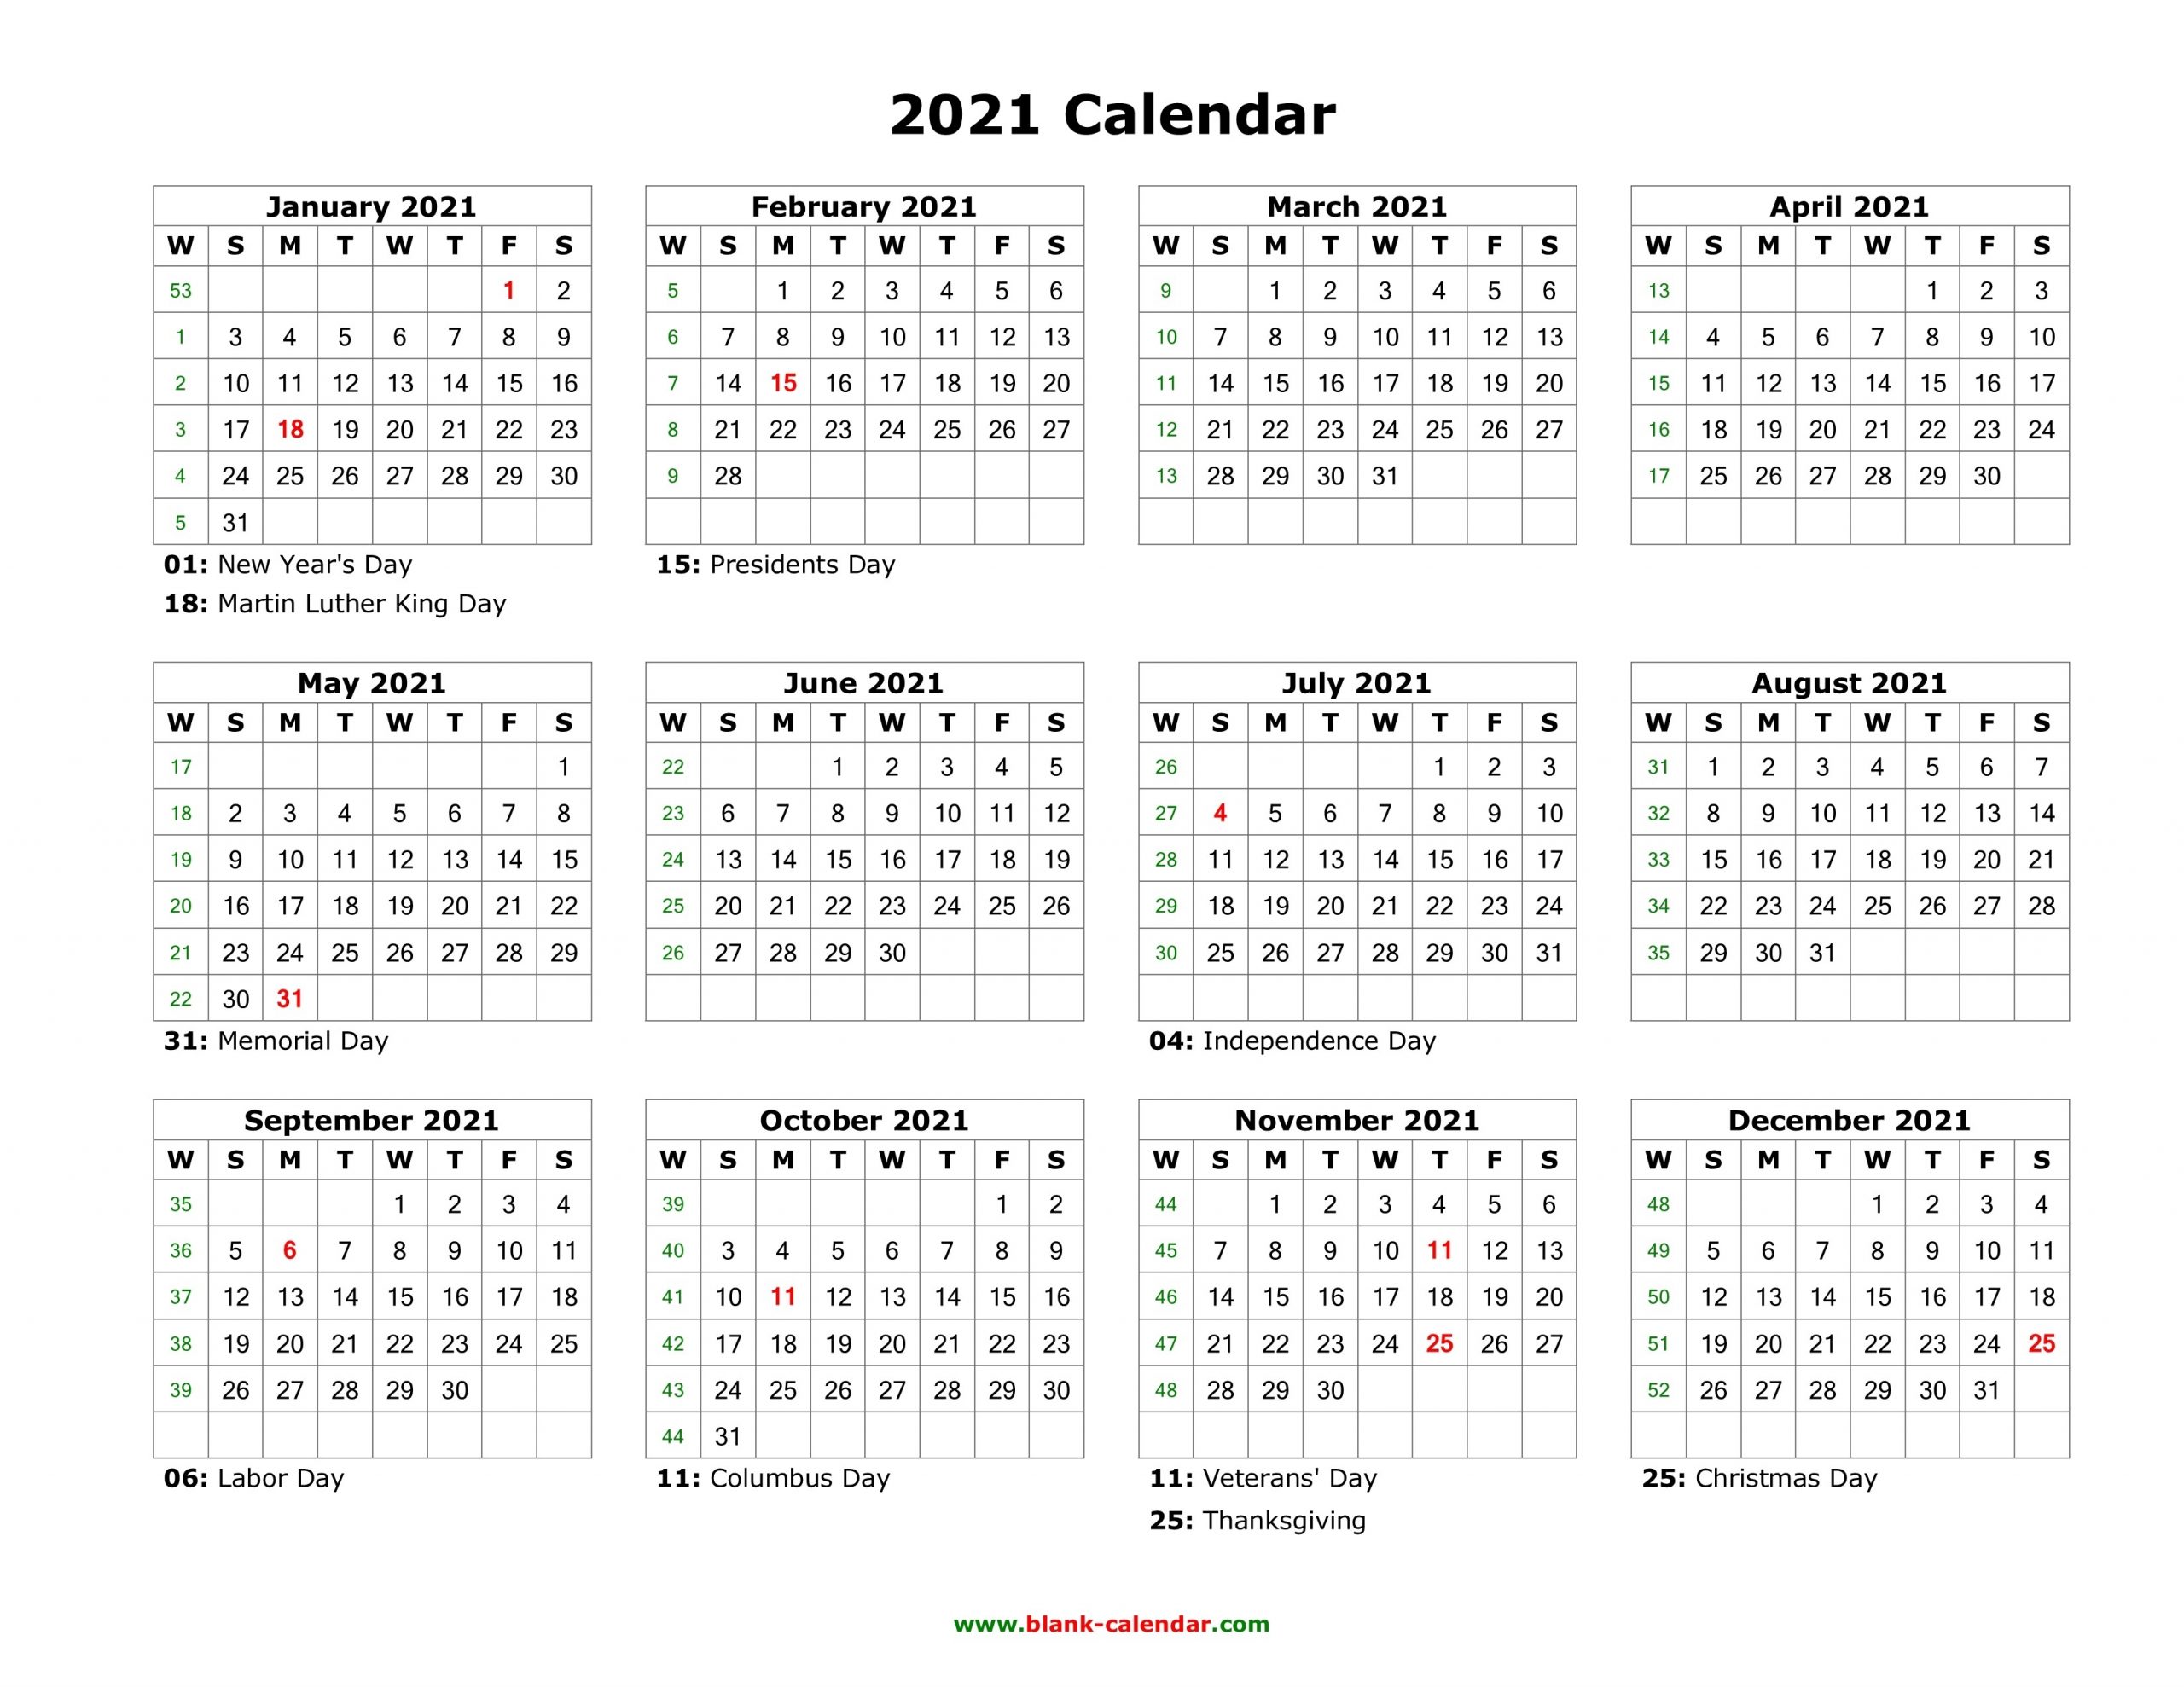 Blank Calendar 2021 | Free Download Calendar Templates-June 2021 Calendar Word Doc